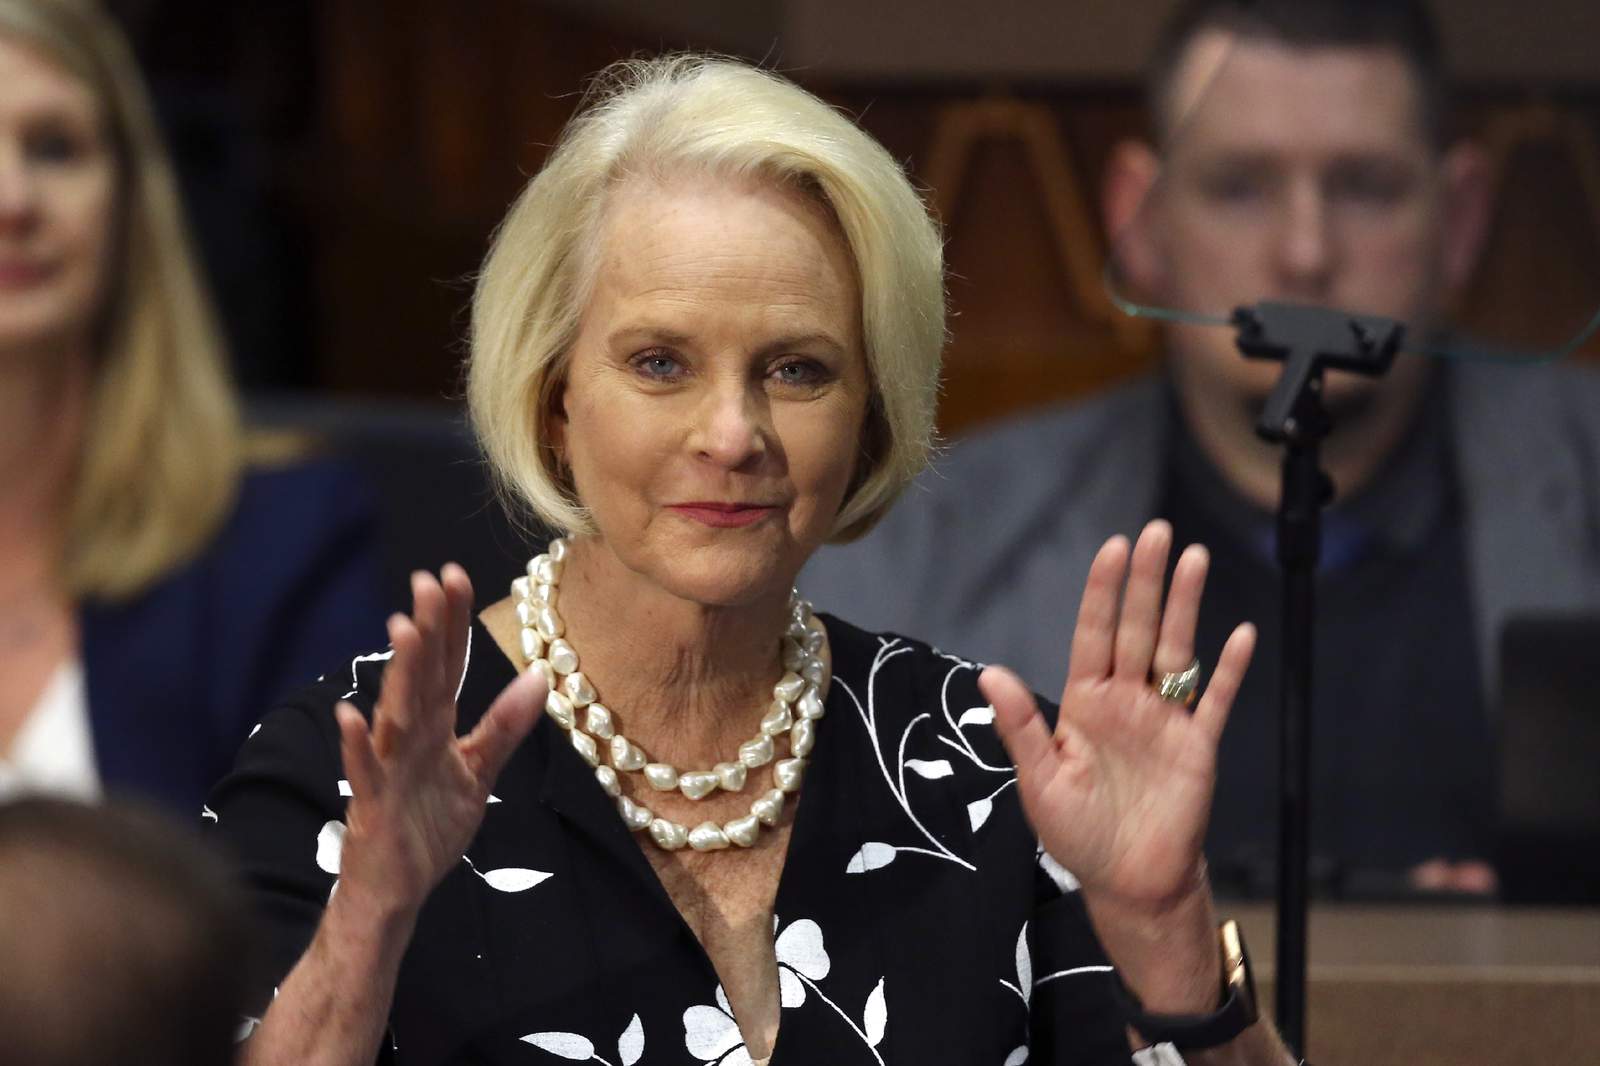 Cindy McCain joins Biden's transition advisory board